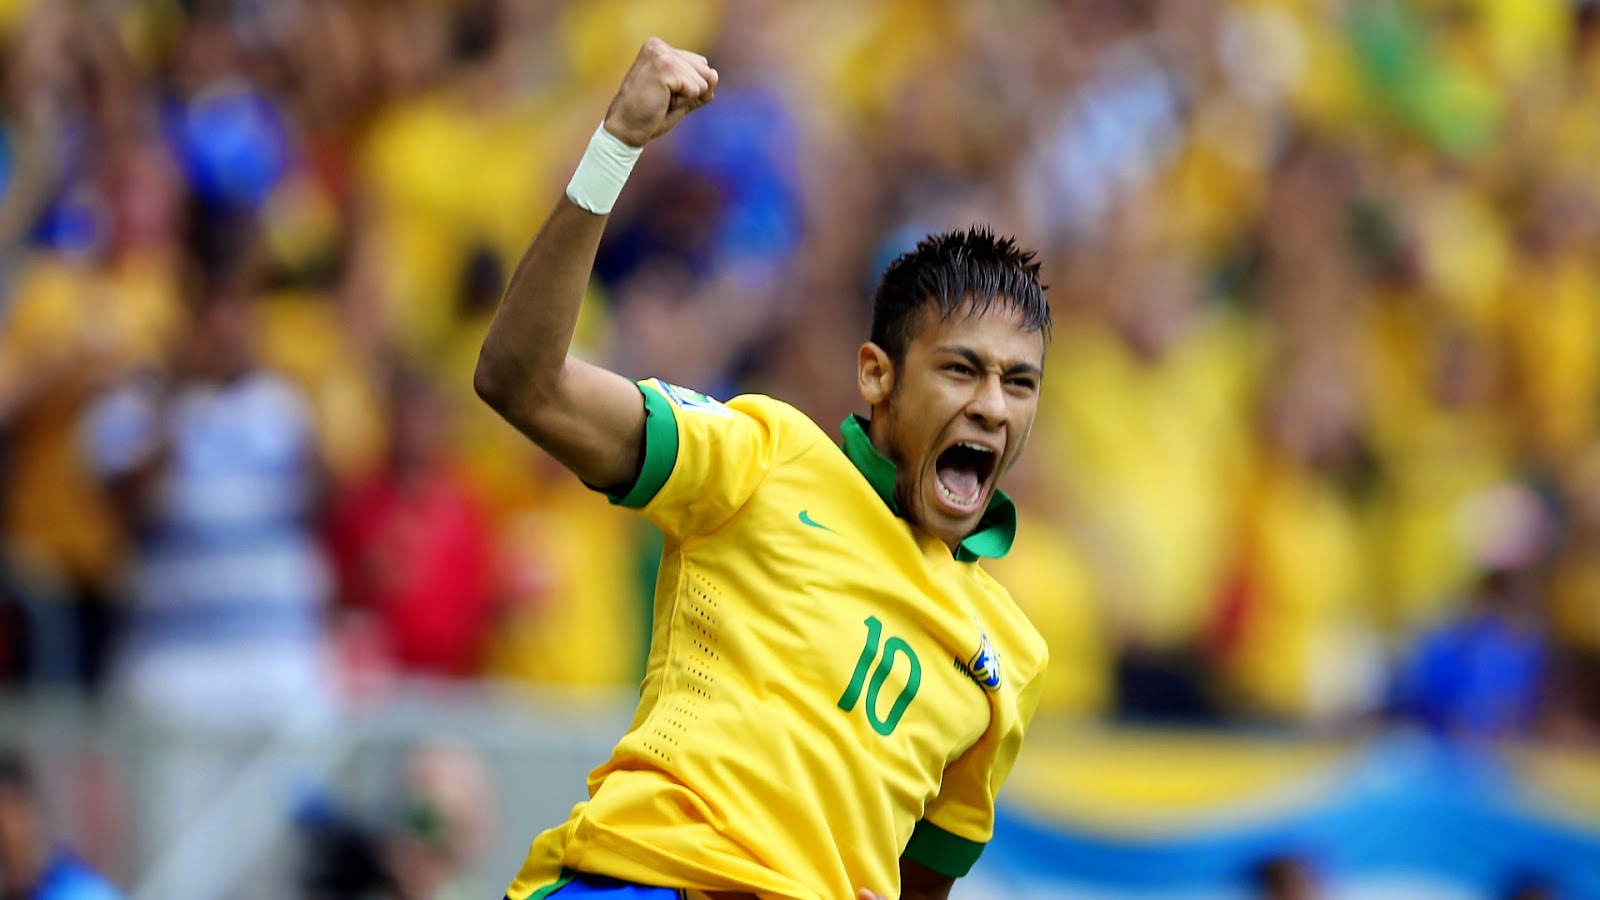 ALL SPORTS PLAYERS: Neymar Jr hd Wallpapers 2014